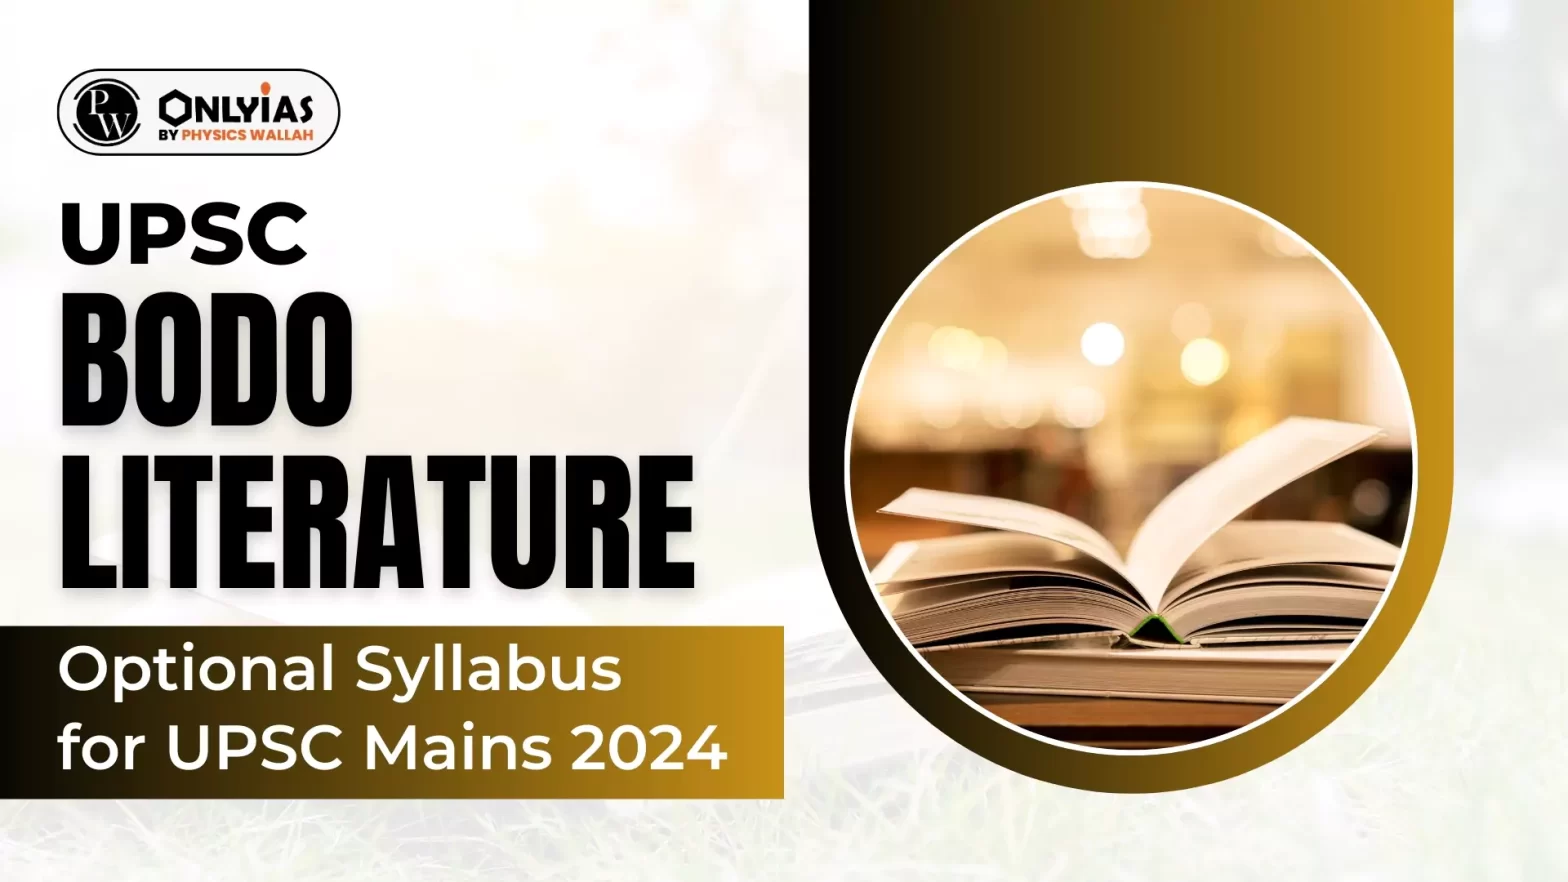 UPSC Bodo Literature Optional Syllabus  for UPSC Mains 2024